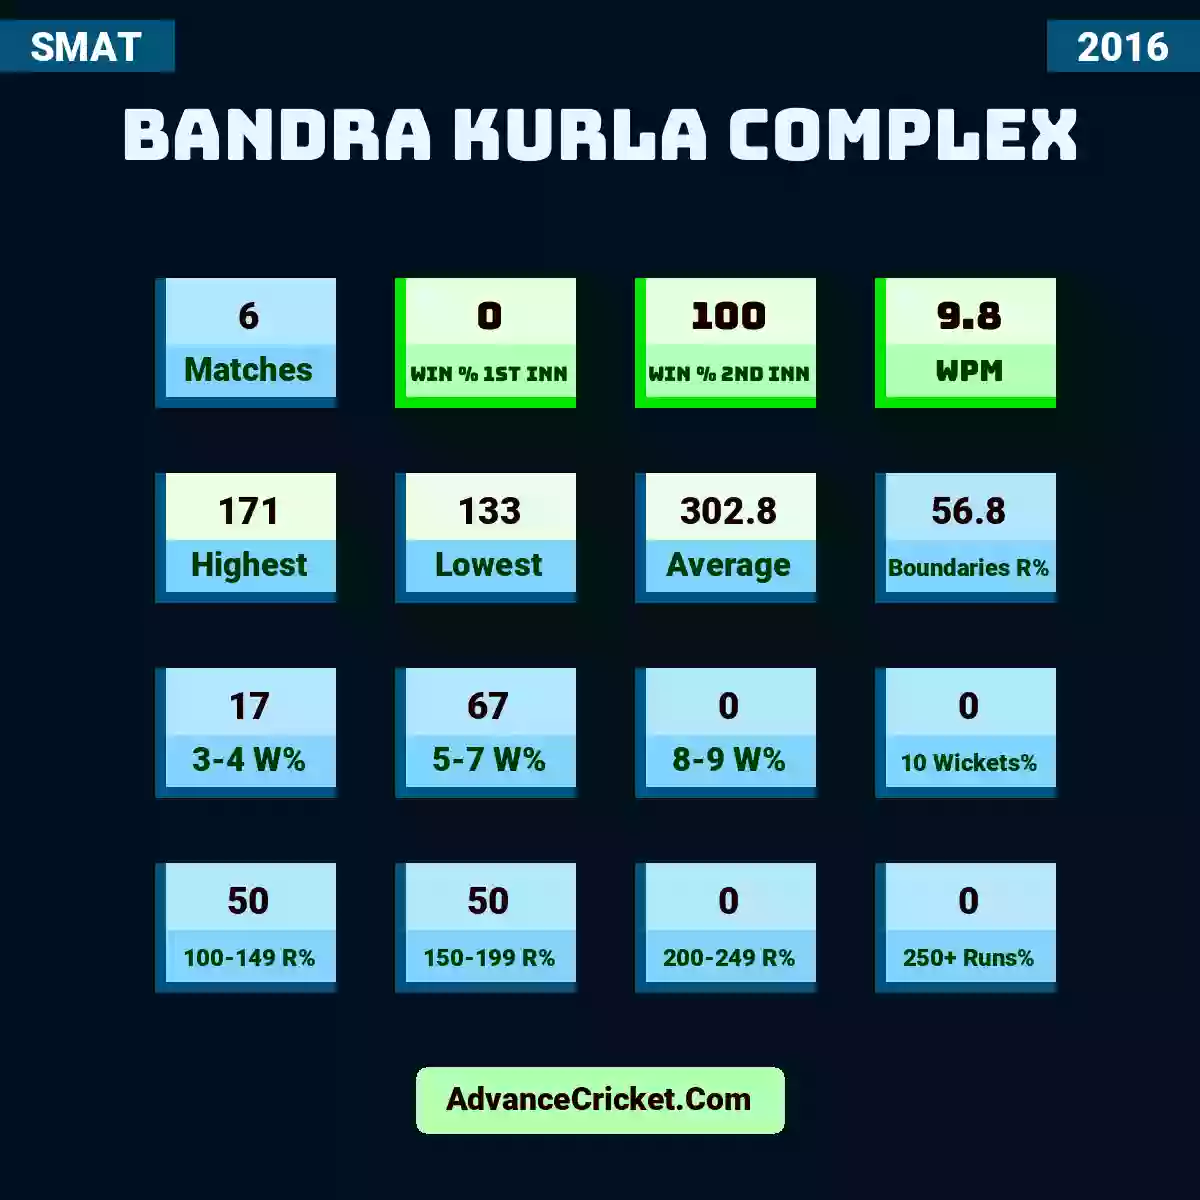 Image showing Bandra Kurla Complex with Matches: 6, Win % 1st Inn: 0, Win % 2nd Inn: 100, WPM: 9.8, Highest: 171, Lowest: 133, Average: 302.8, Boundaries R%: 56.8, 3-4 W%: 17, 5-7 W%: 67, 8-9 W%: 0, 10 Wickets%: 0, 100-149 R%: 50, 150-199 R%: 50, 200-249 R%: 0, 250+ Runs%: 0.